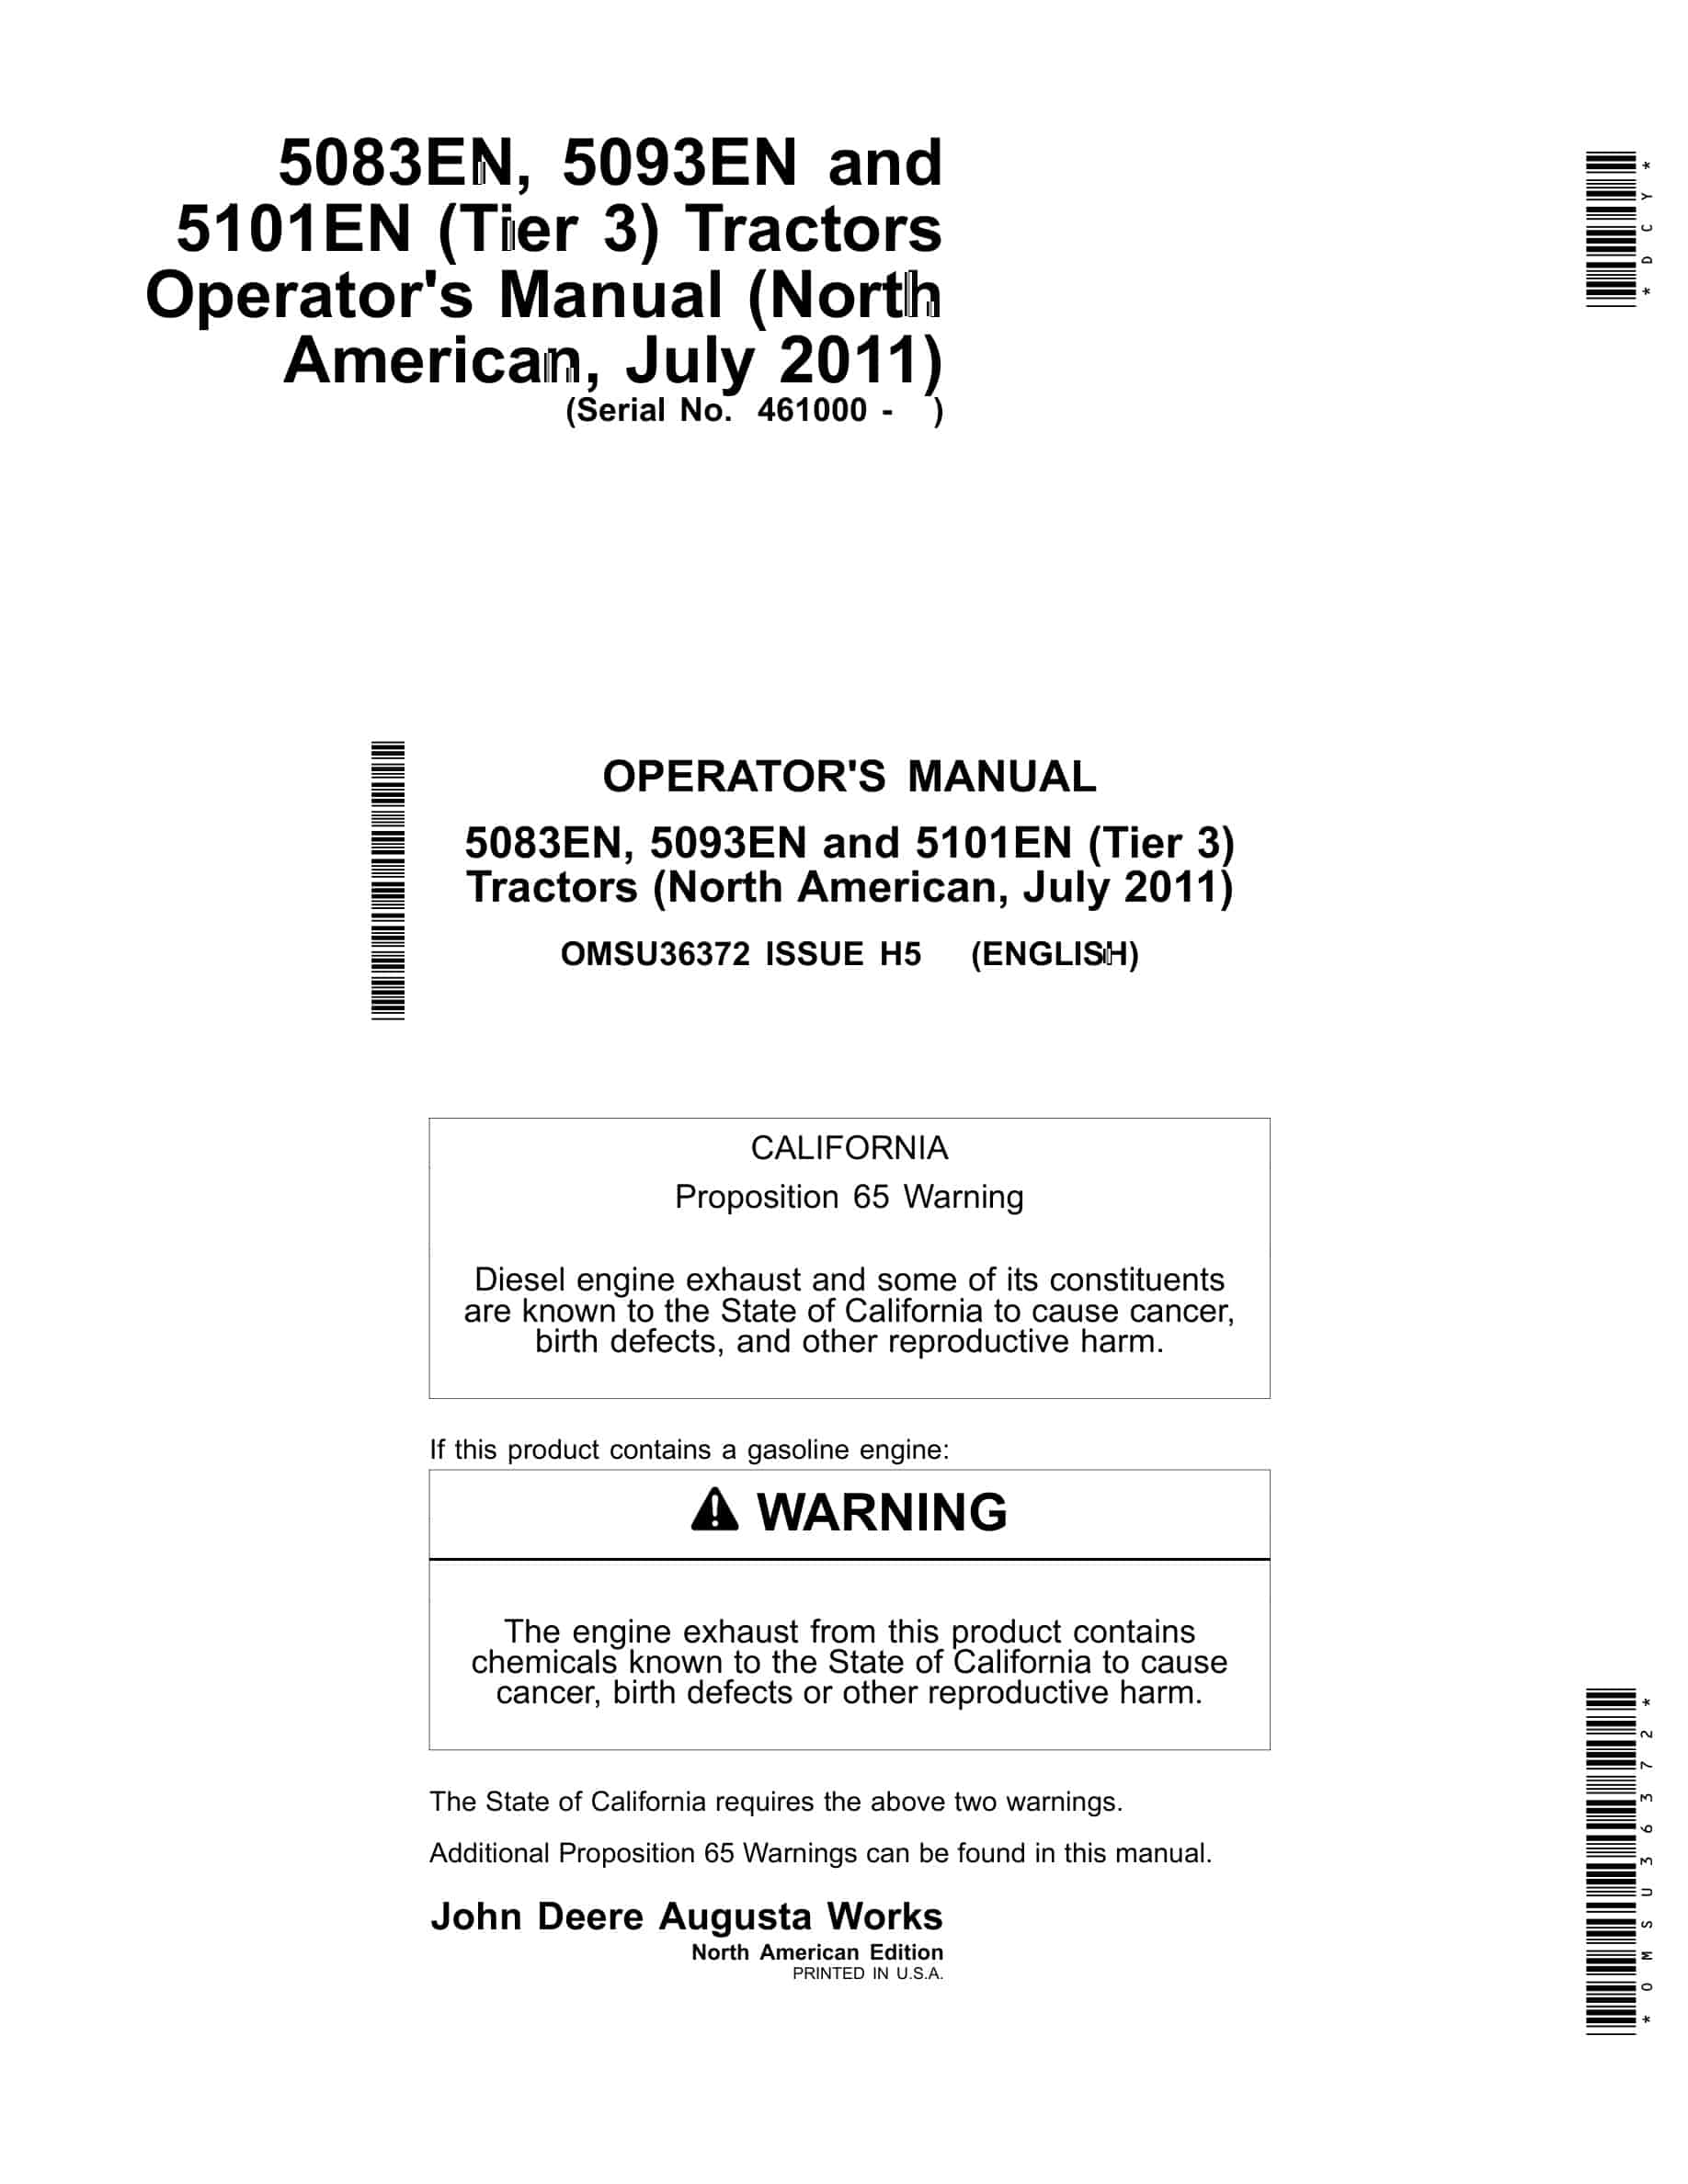 John Deere 5083EN, 5093EN and 5101EN (Tier 3) Tractor Operator Manual OMSU36372-1